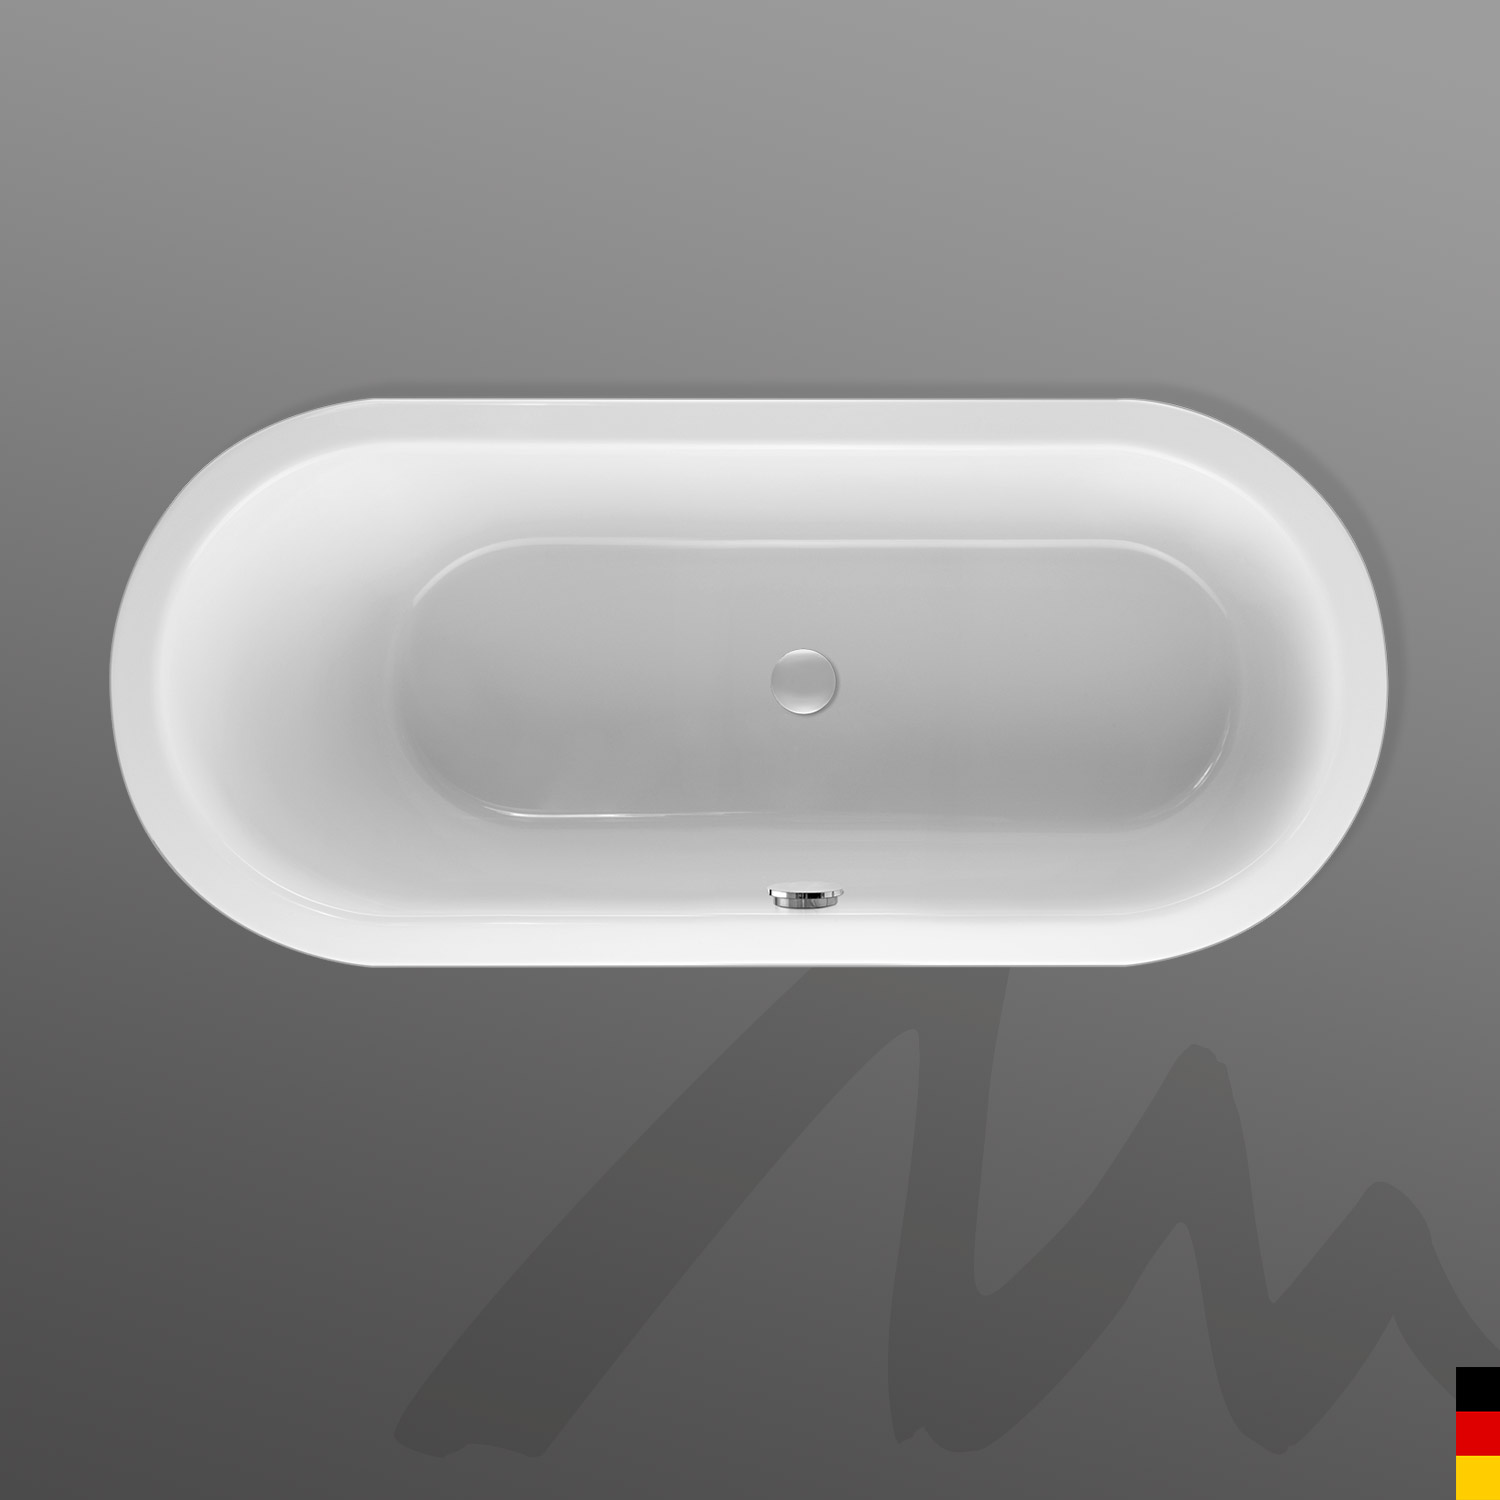 Mauersberger Badewanne Oval Crispa 180/80 uno  180x80x45cm  Farbe:rein-weiß